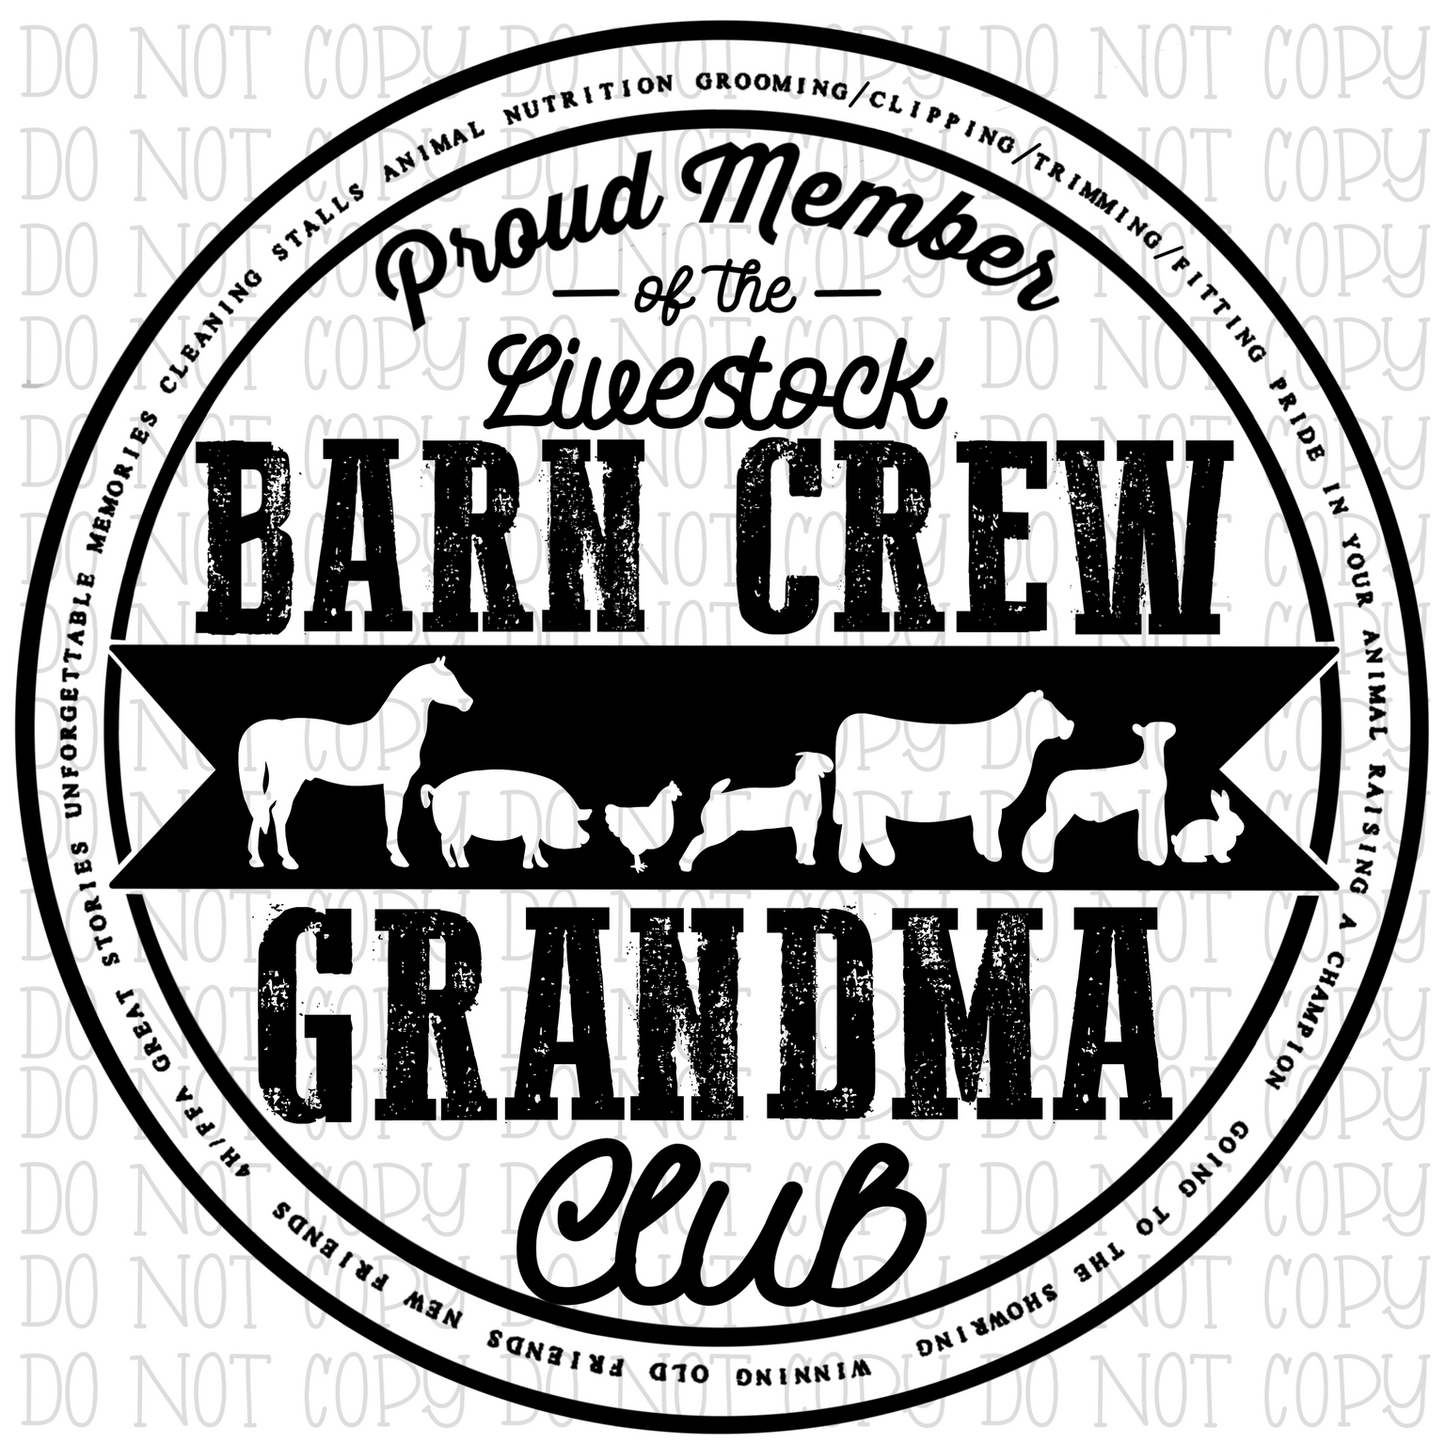 Member of the Livestock Barn Crew Grandma Club